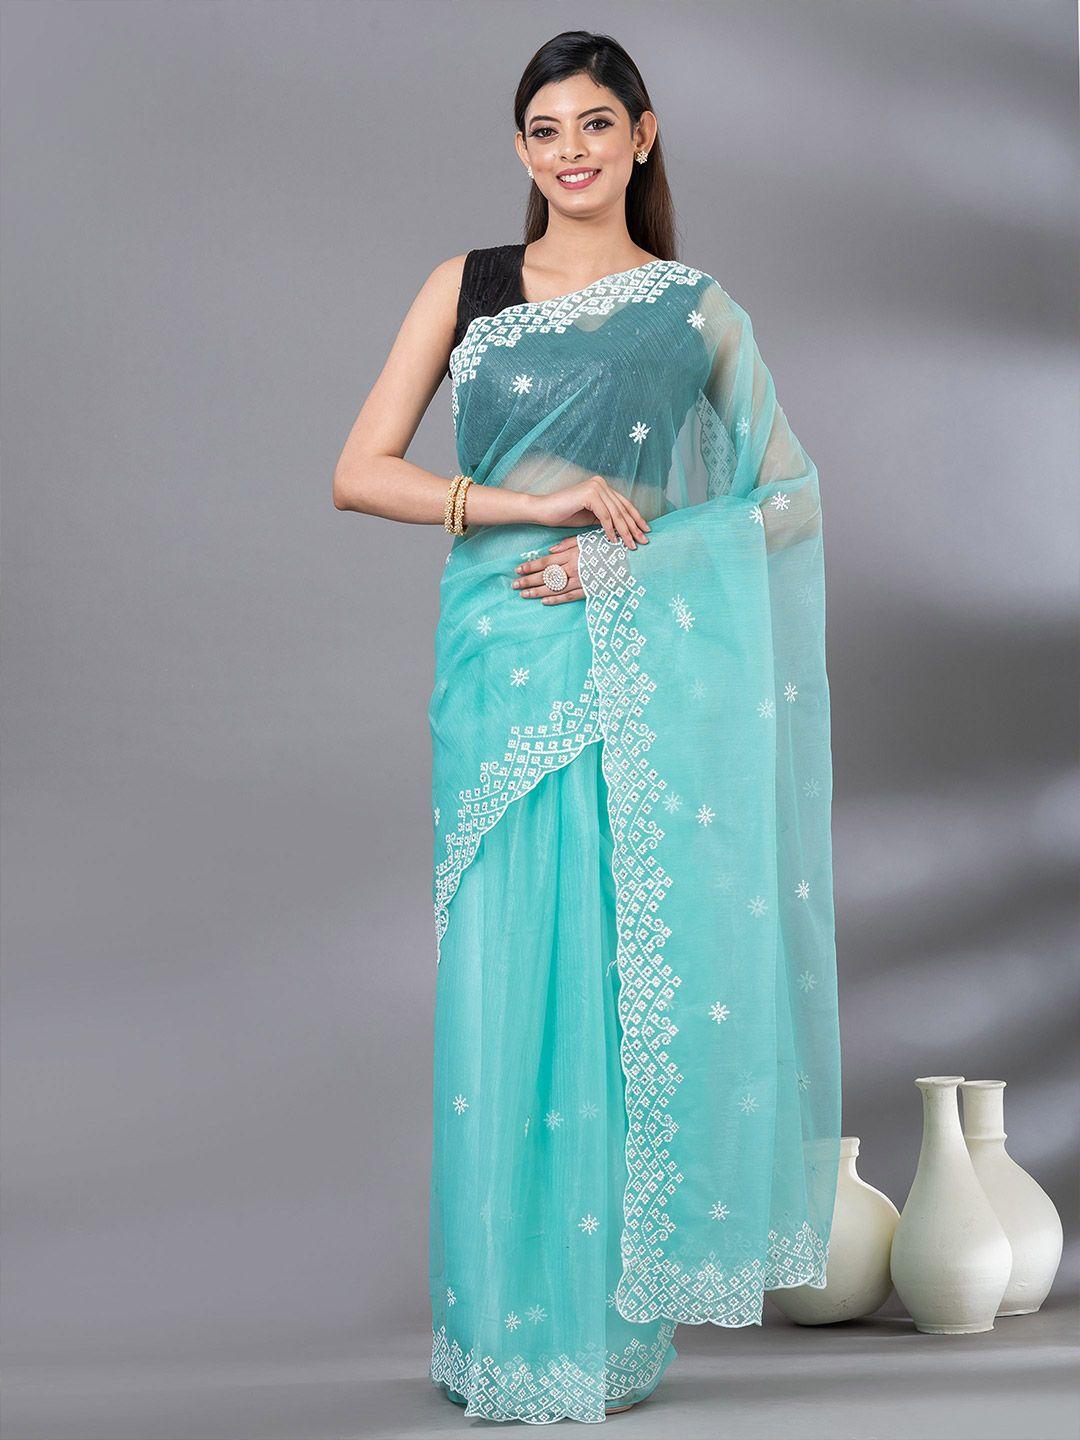 mahalasa turquoise blue ethnic motifs embroidered tissue saree